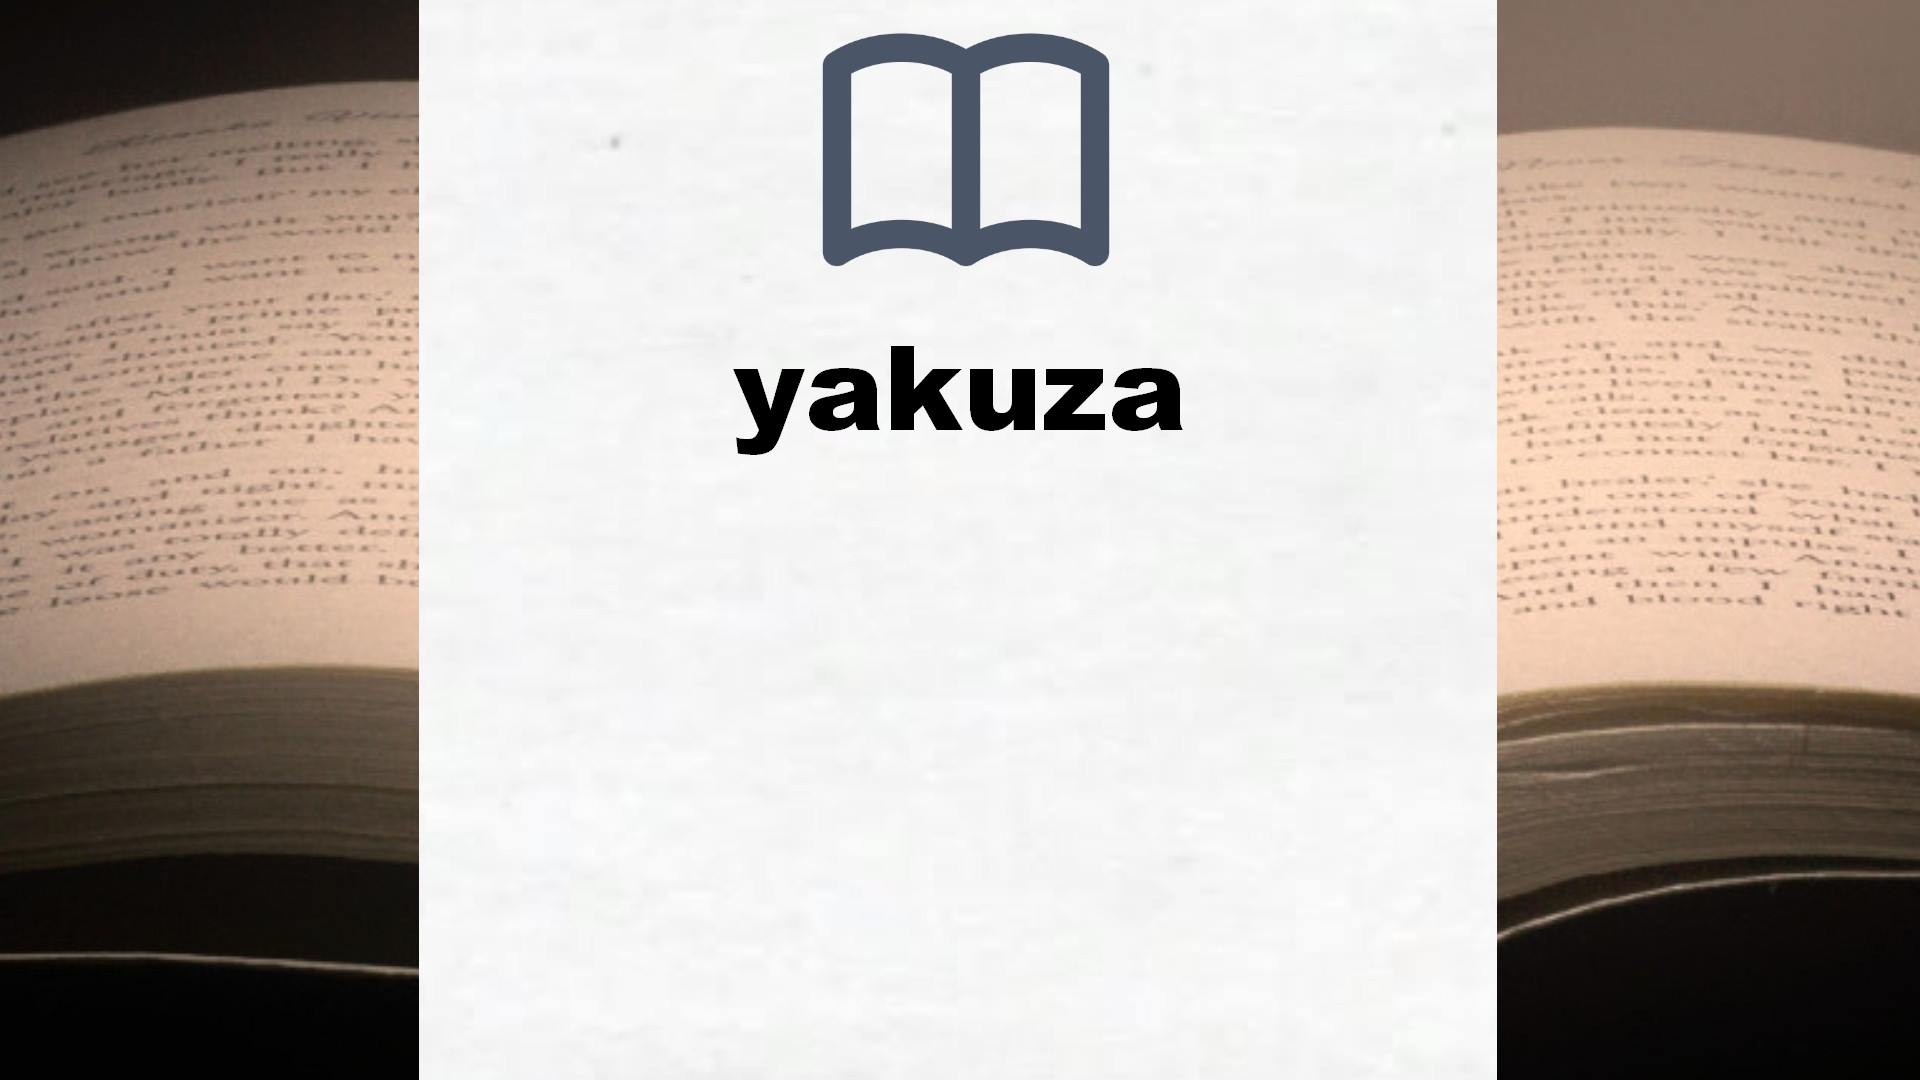 Libros sobre yakuza